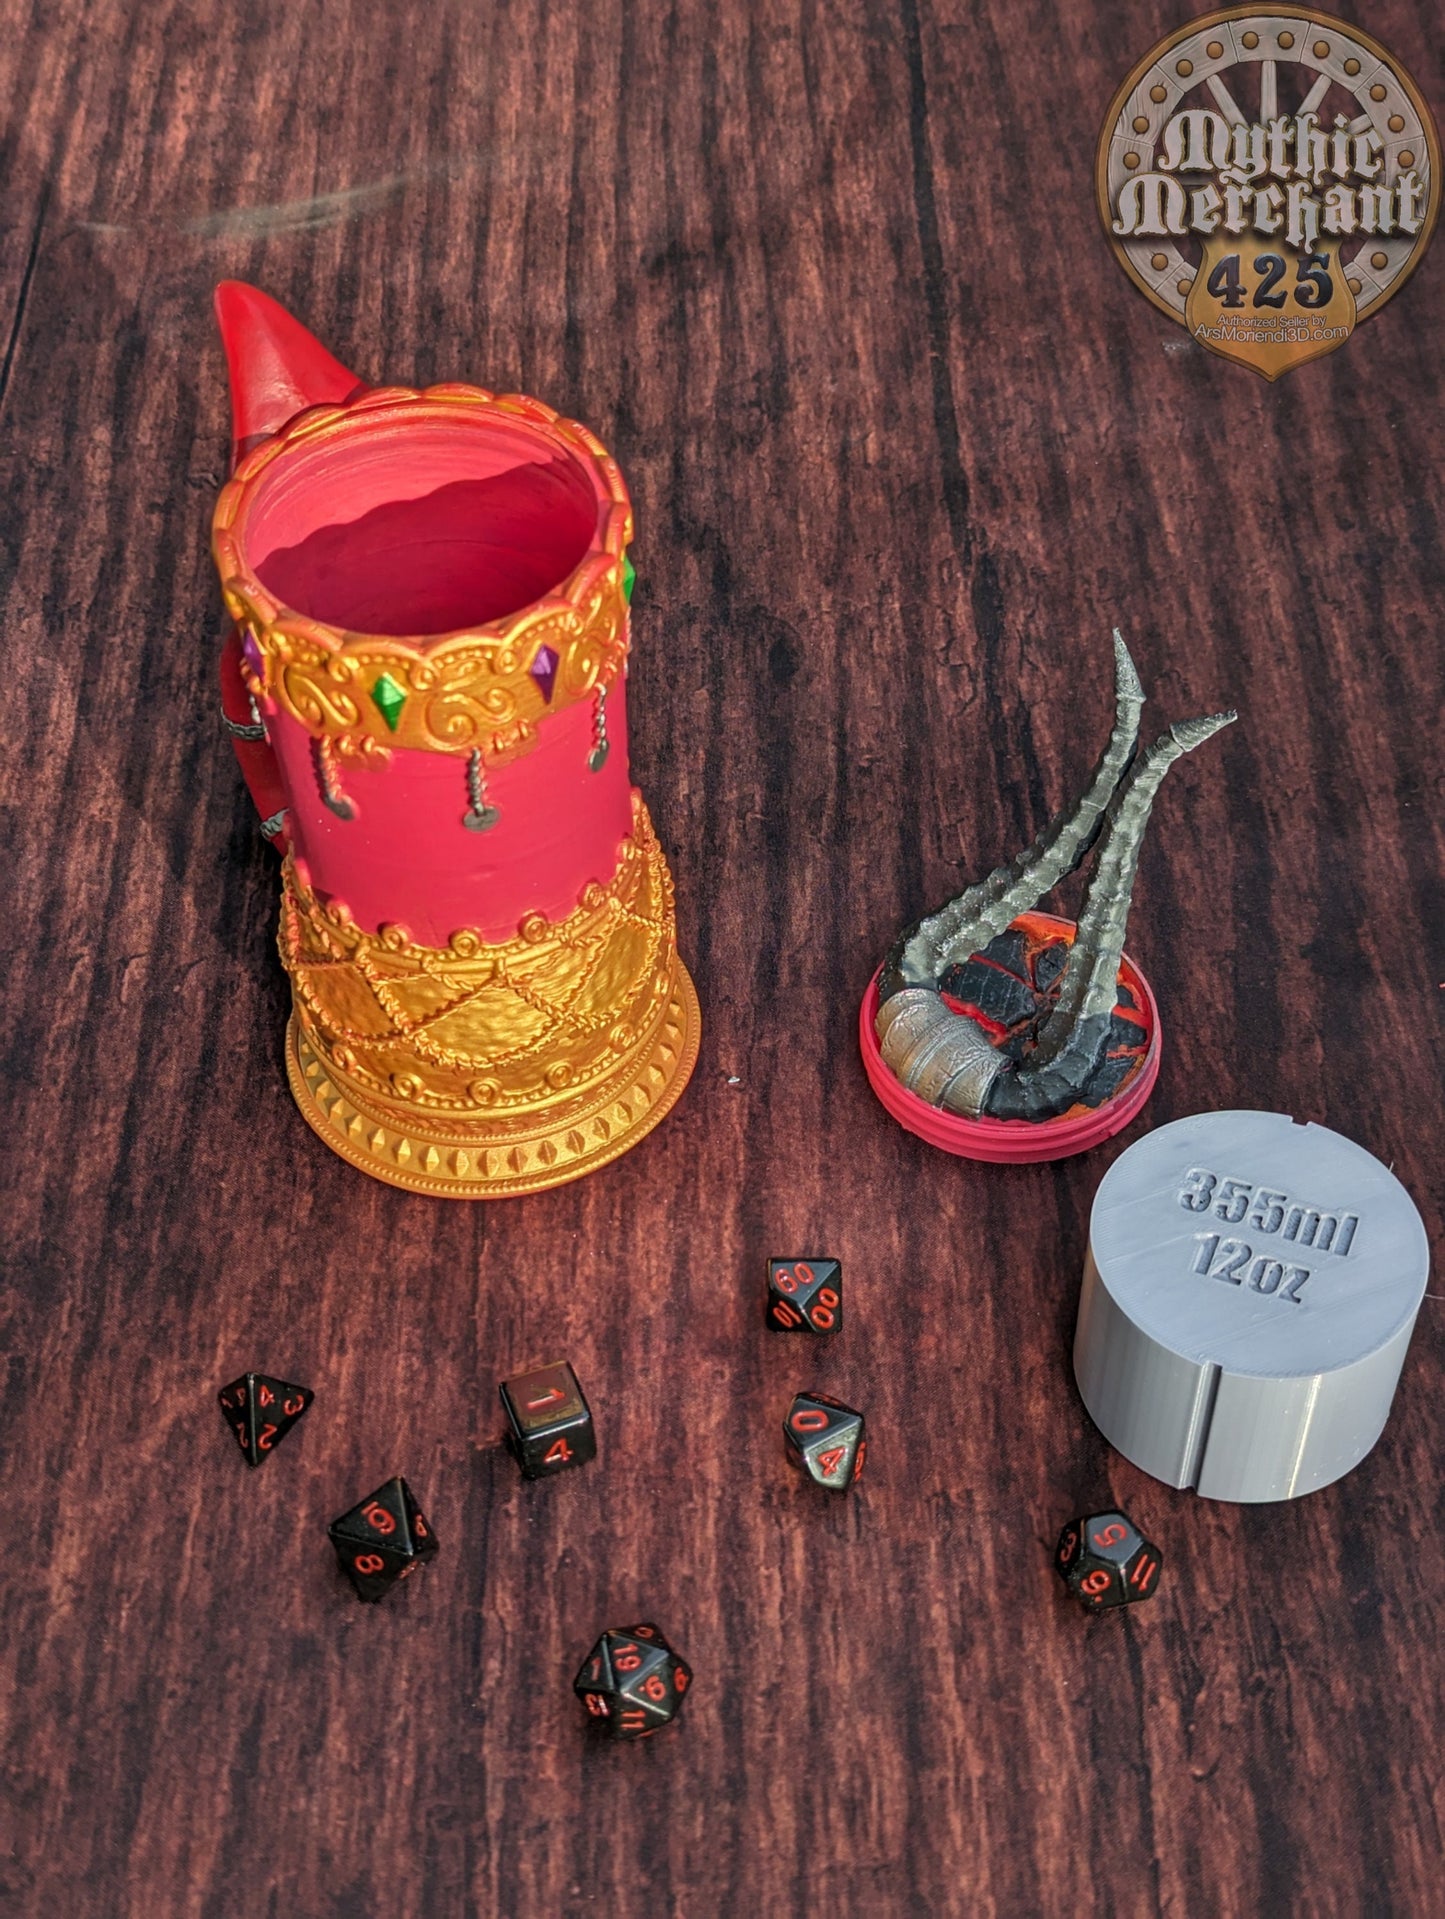 Demon-Blooded Tiefling 3D Printed Mythic Mug Stein | Tabletop RPG Dice Gaming Cosplay | Dungeons and Dragons D&D Wargaming | Drink Koozie